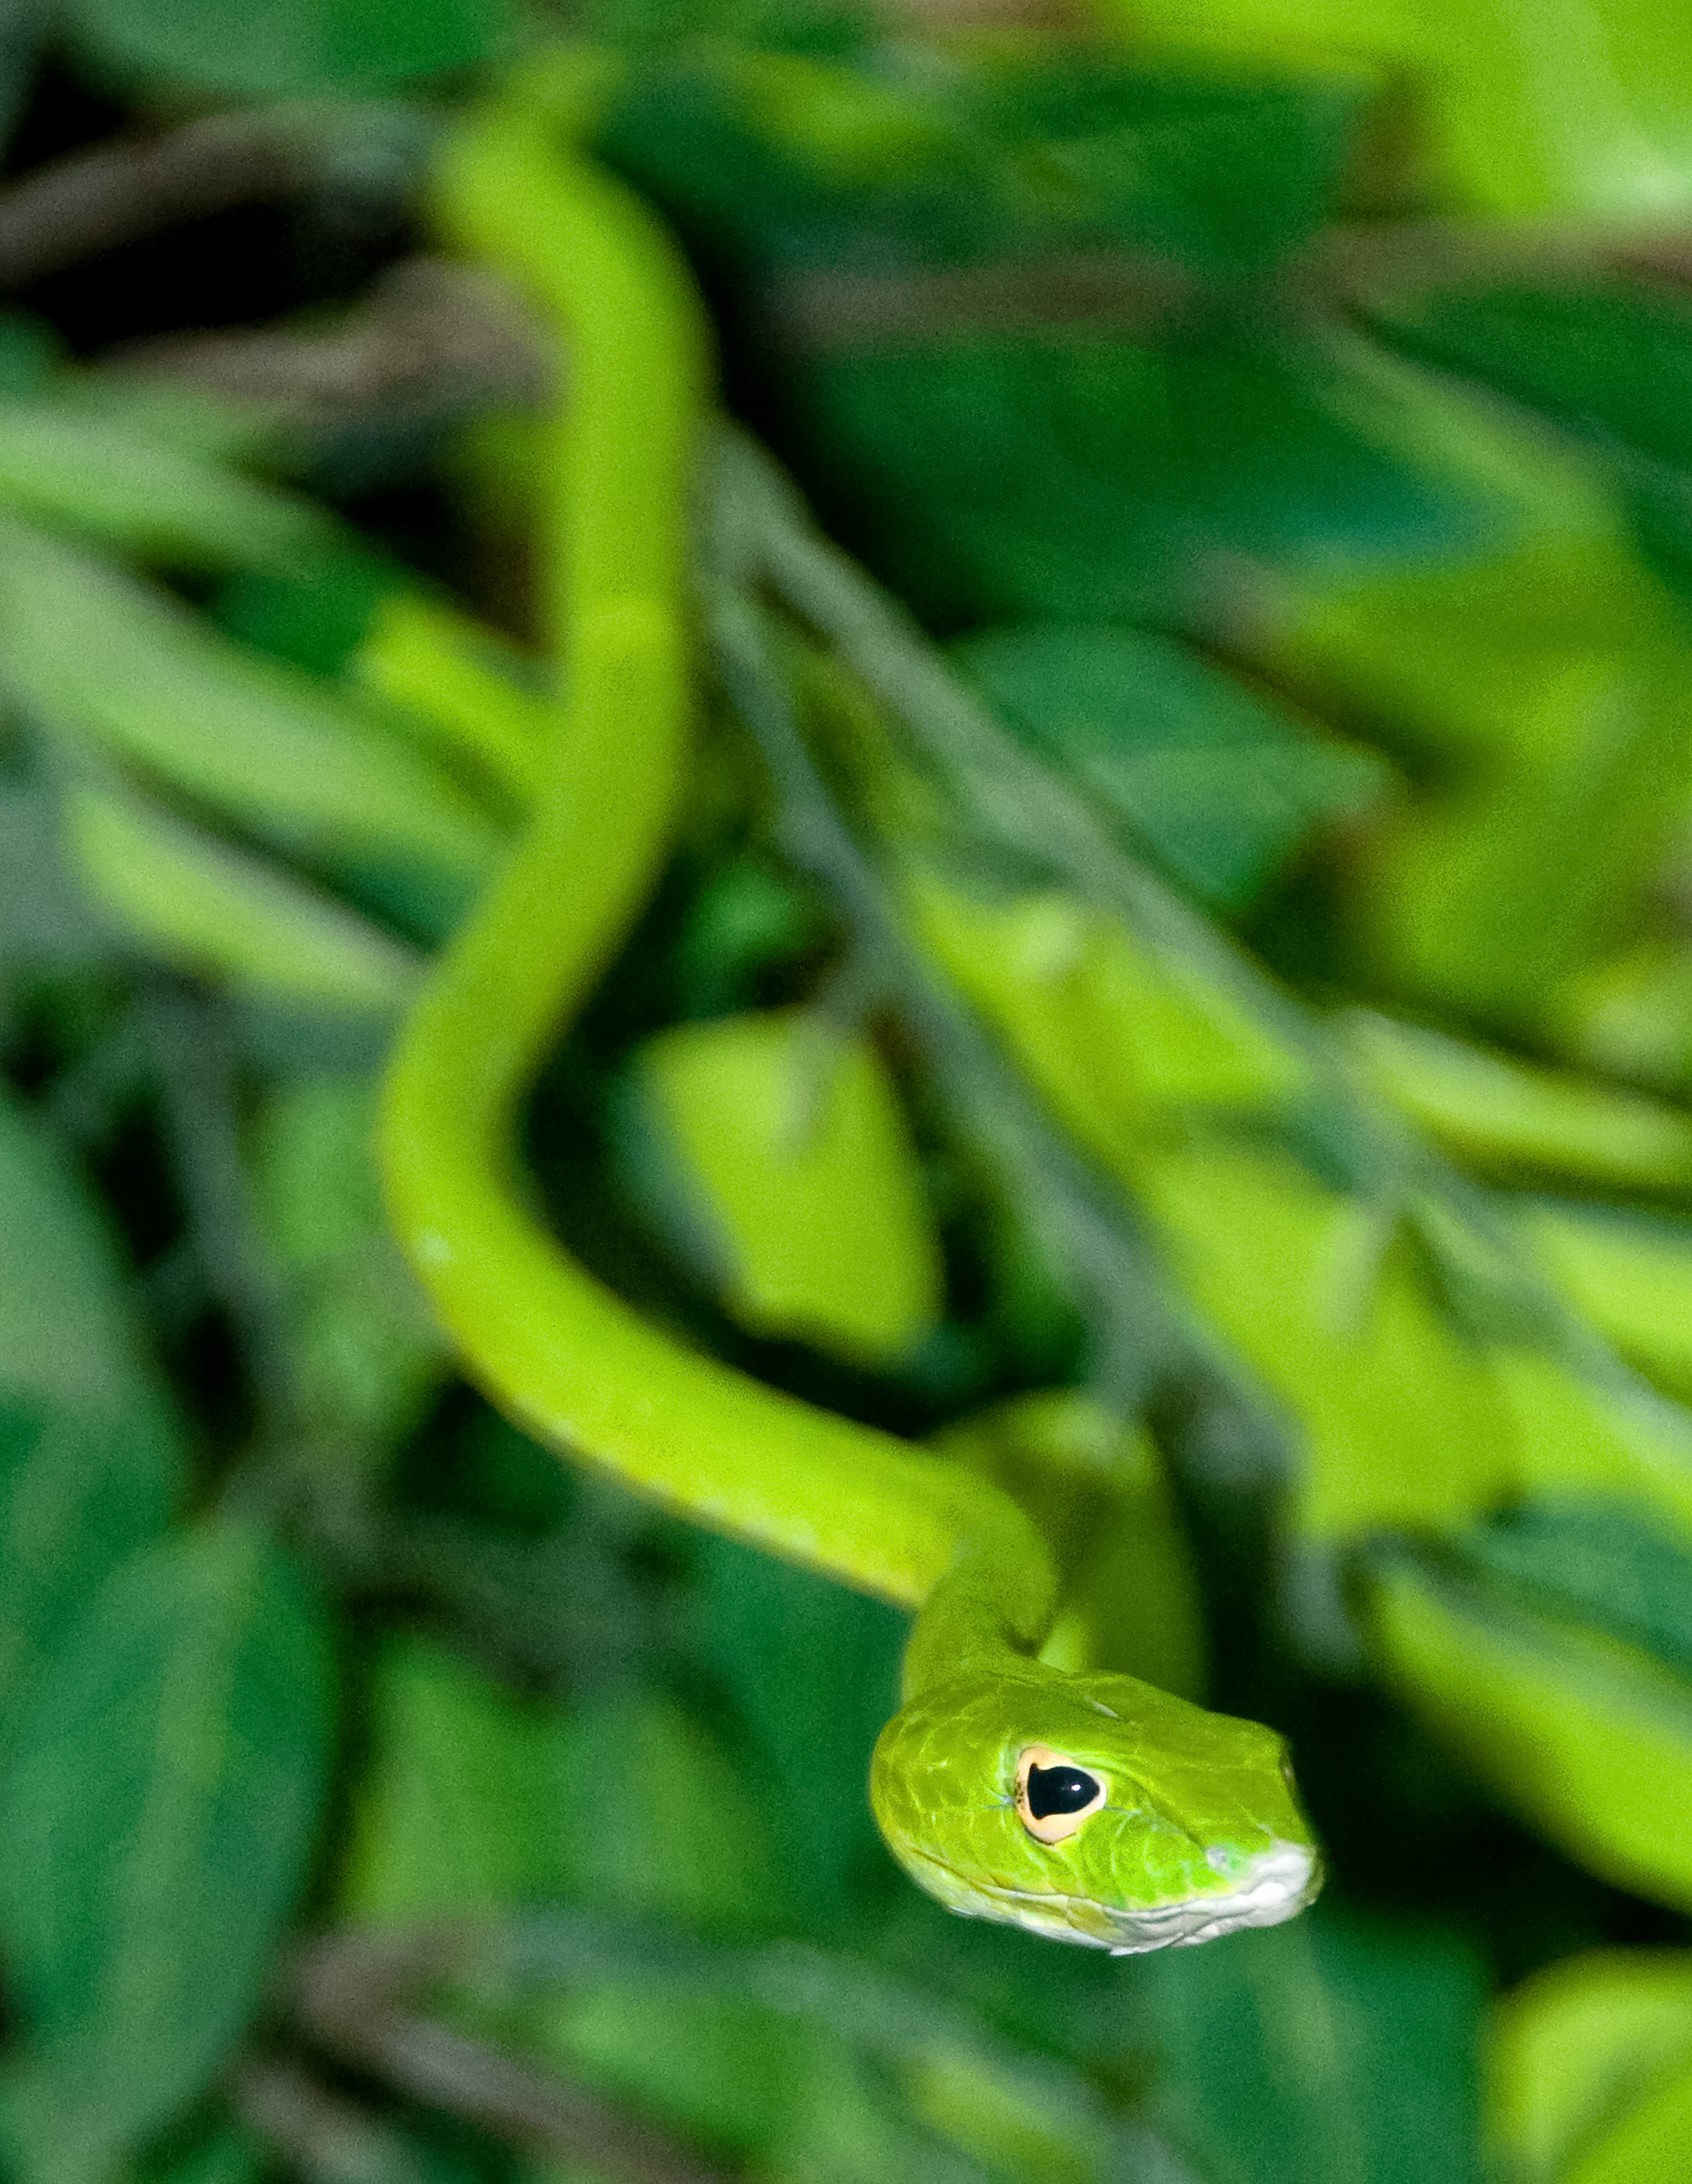 snake-at-bangkok-snake-farm-4705.jpg